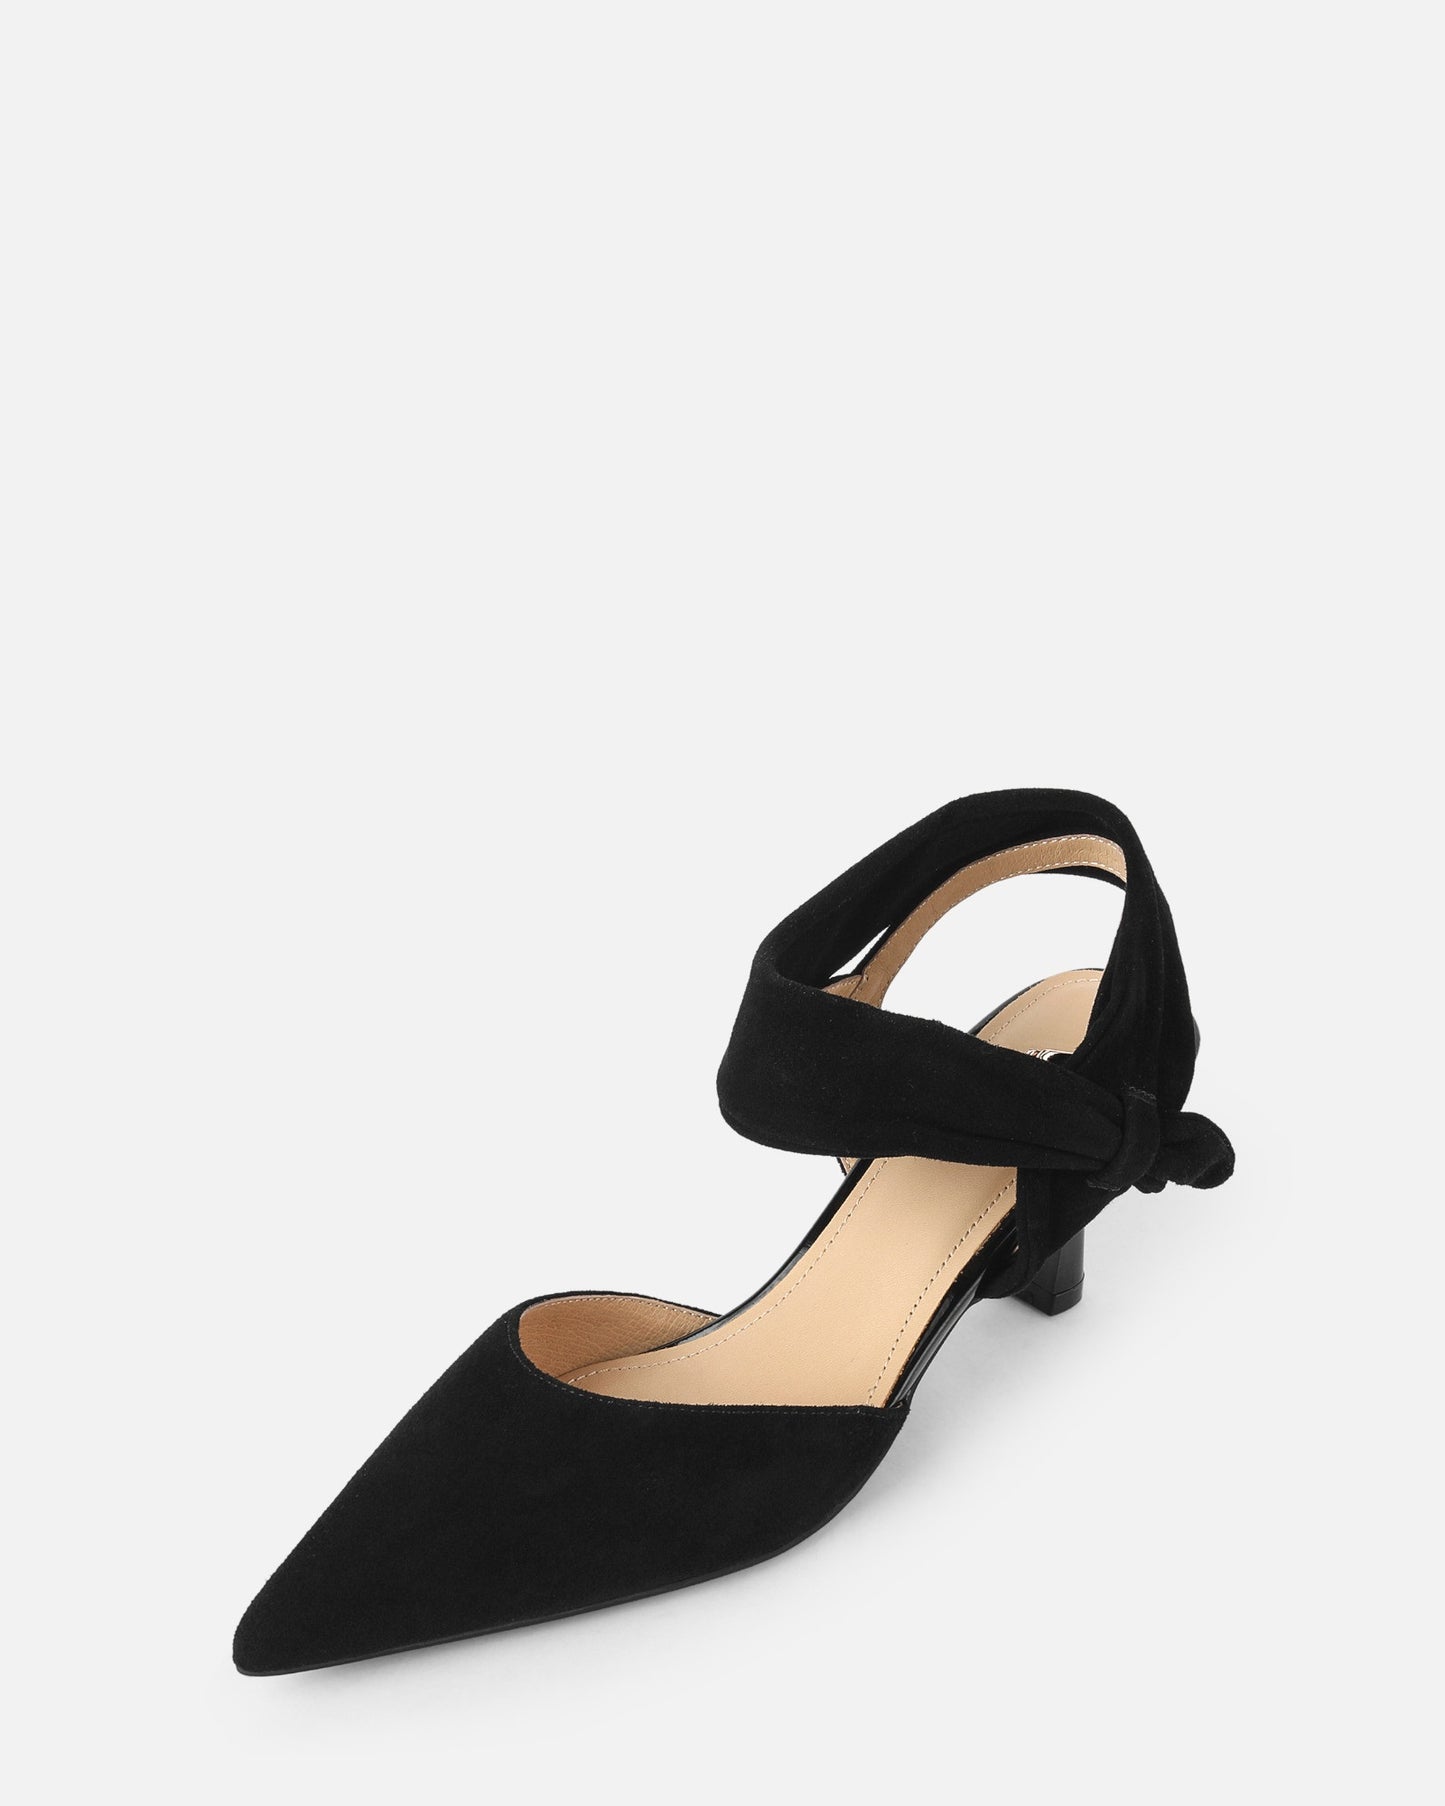 Kaia-ankle-strap-black-suede-heels-model-1